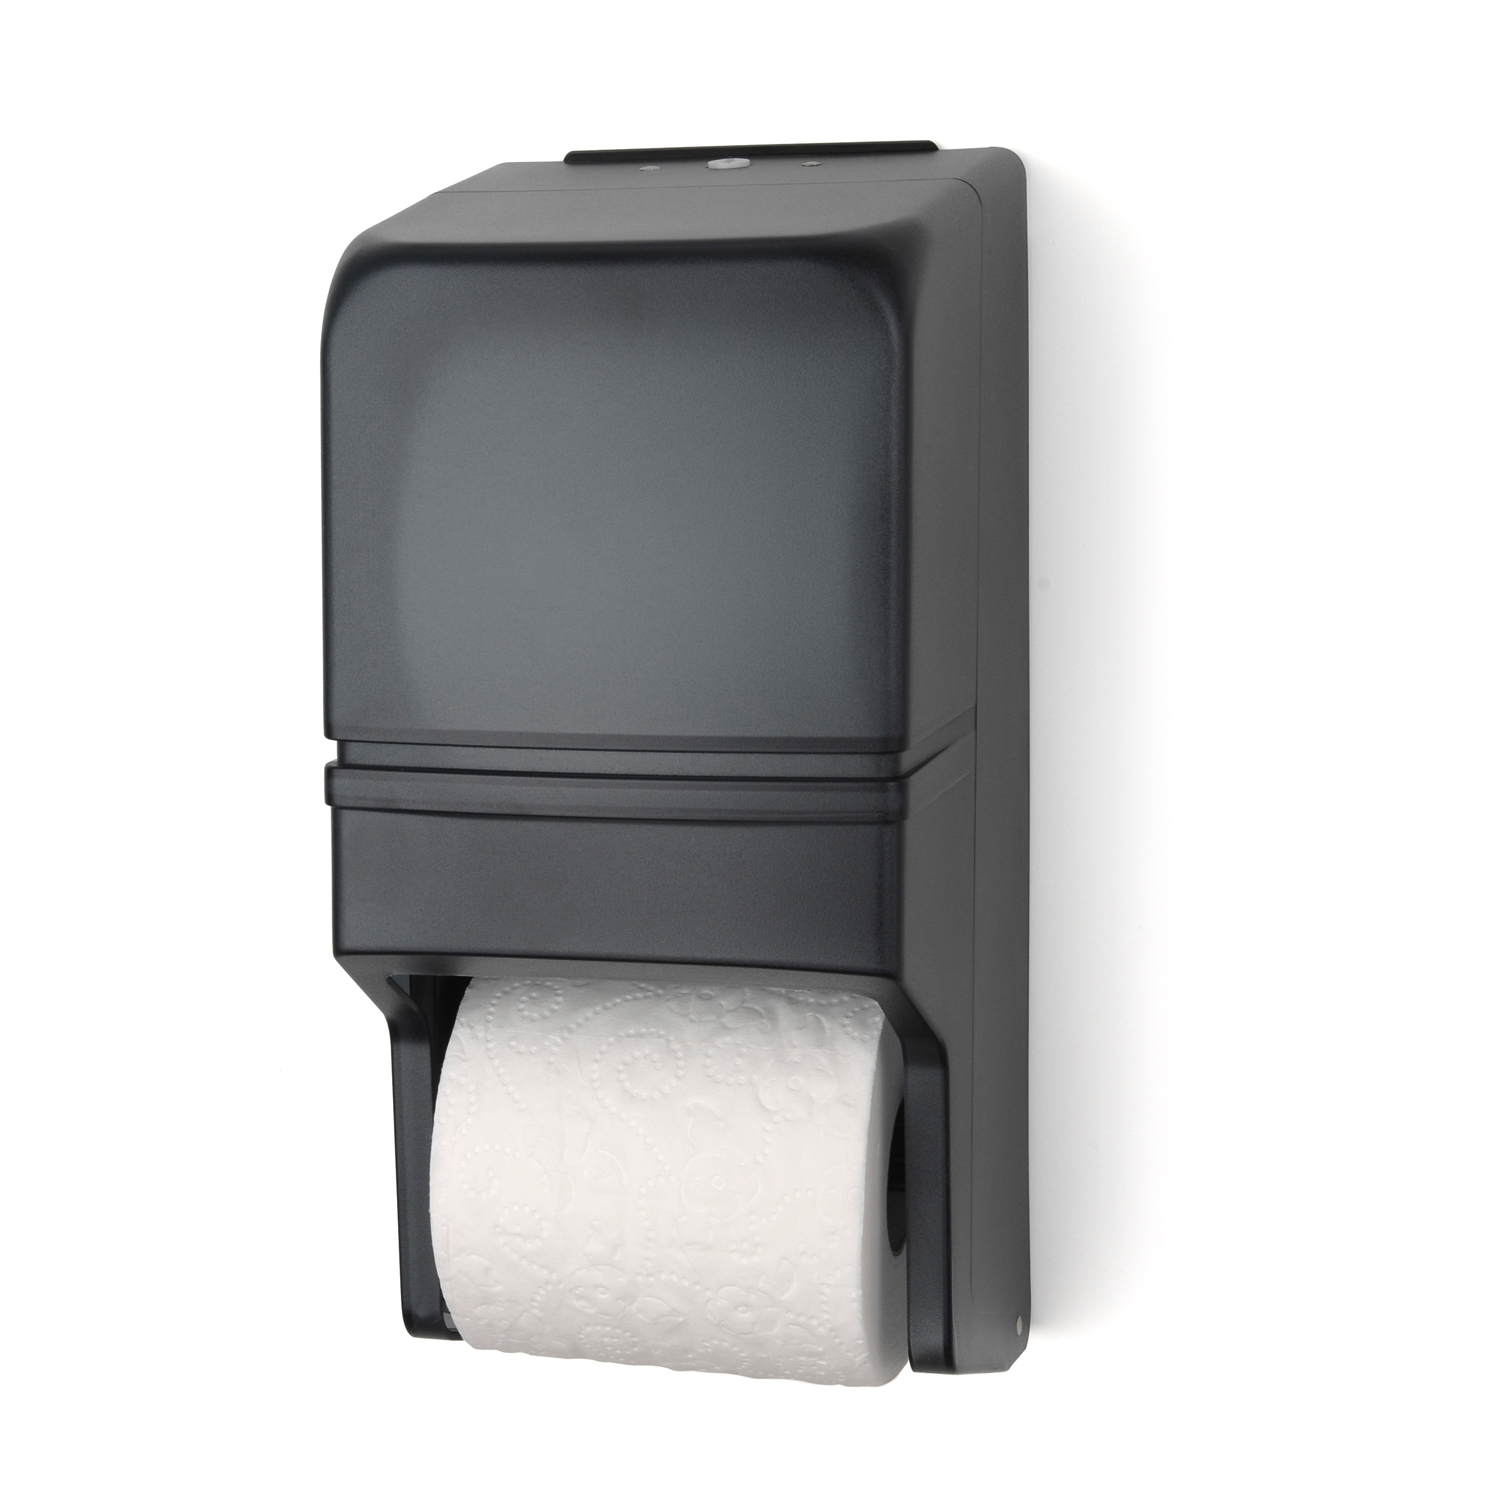 Standard Roll Tissue Dispensers